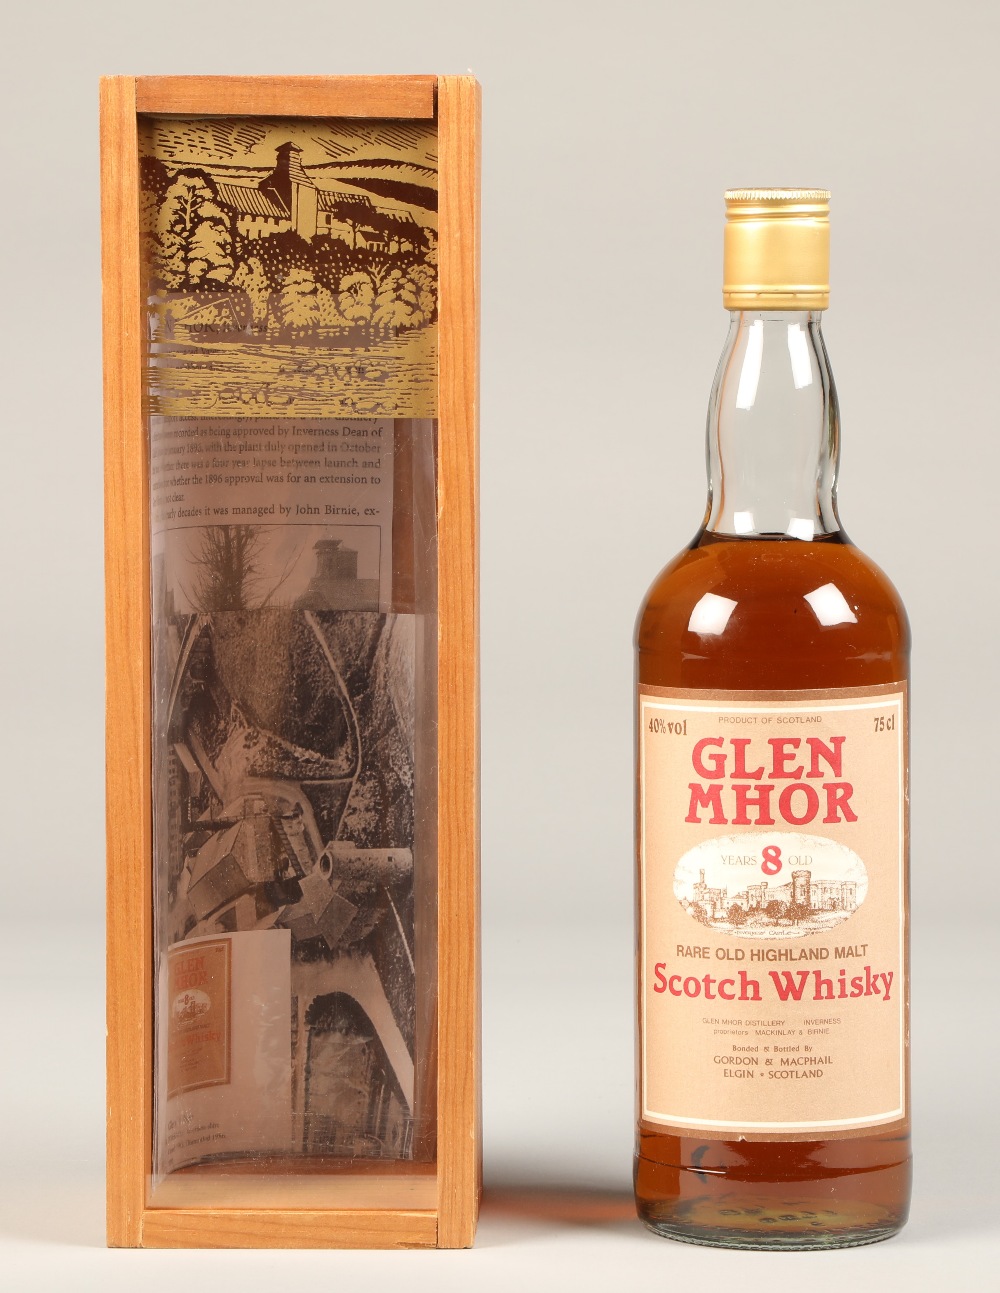 Glen Mhor rare of highland malt scotch whisky, 8 year old,40% vol 75cl, with presentation case.(